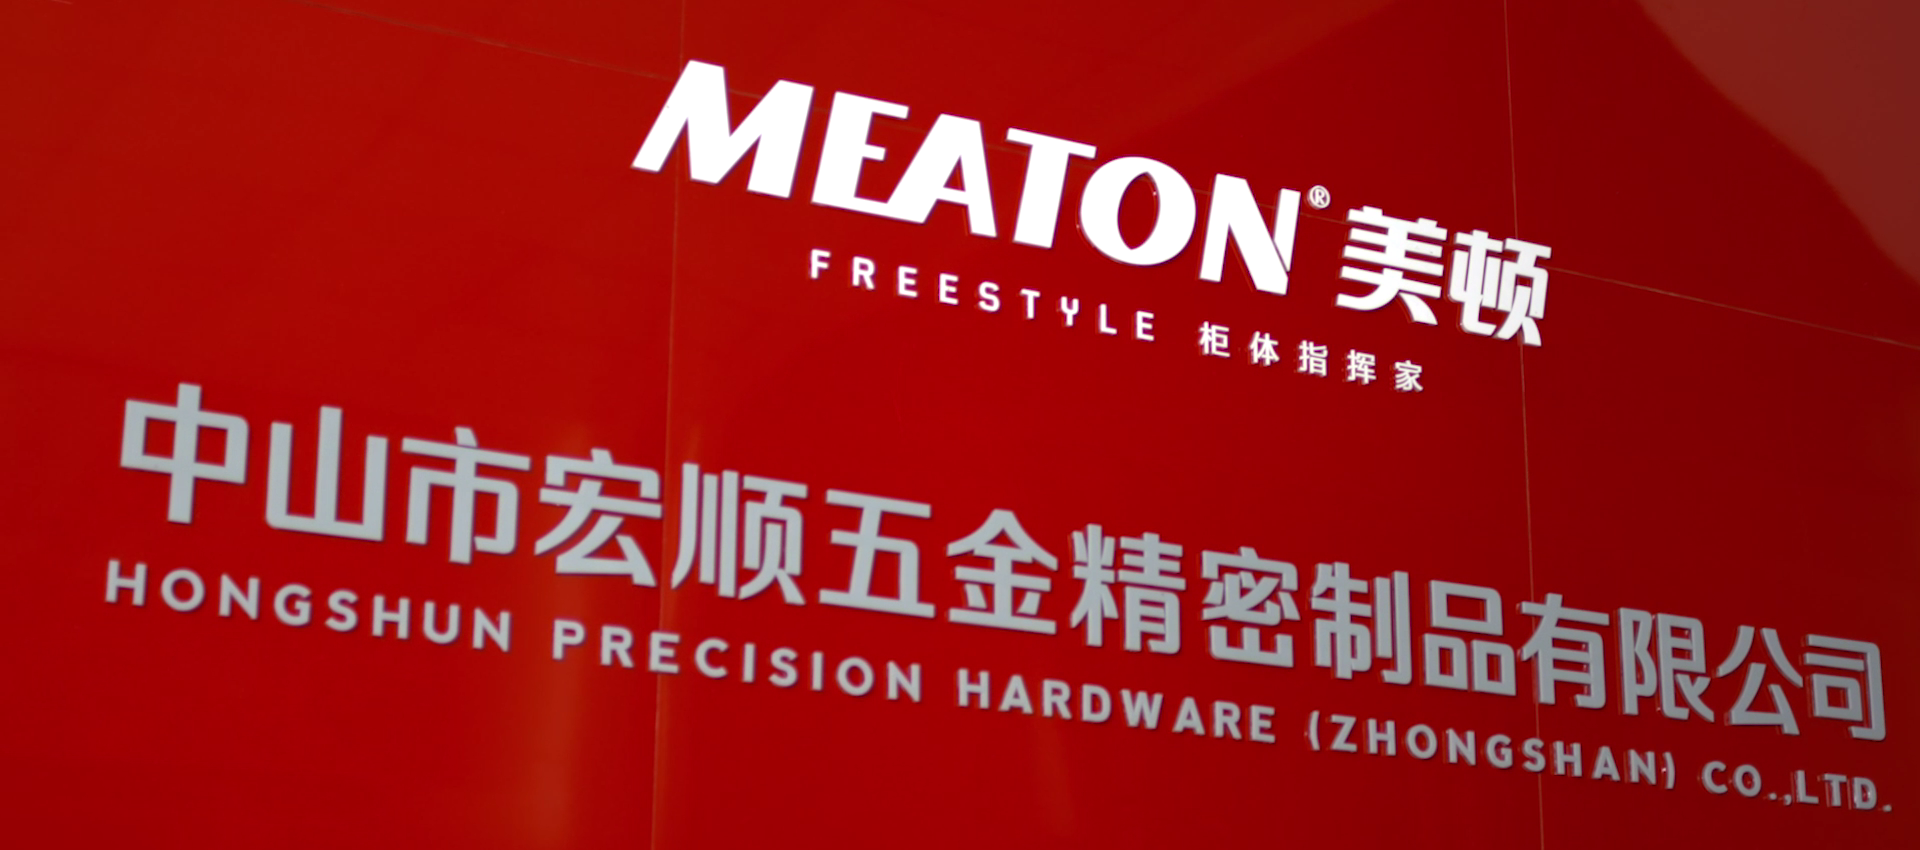 Meaton Hunshun factory:reception